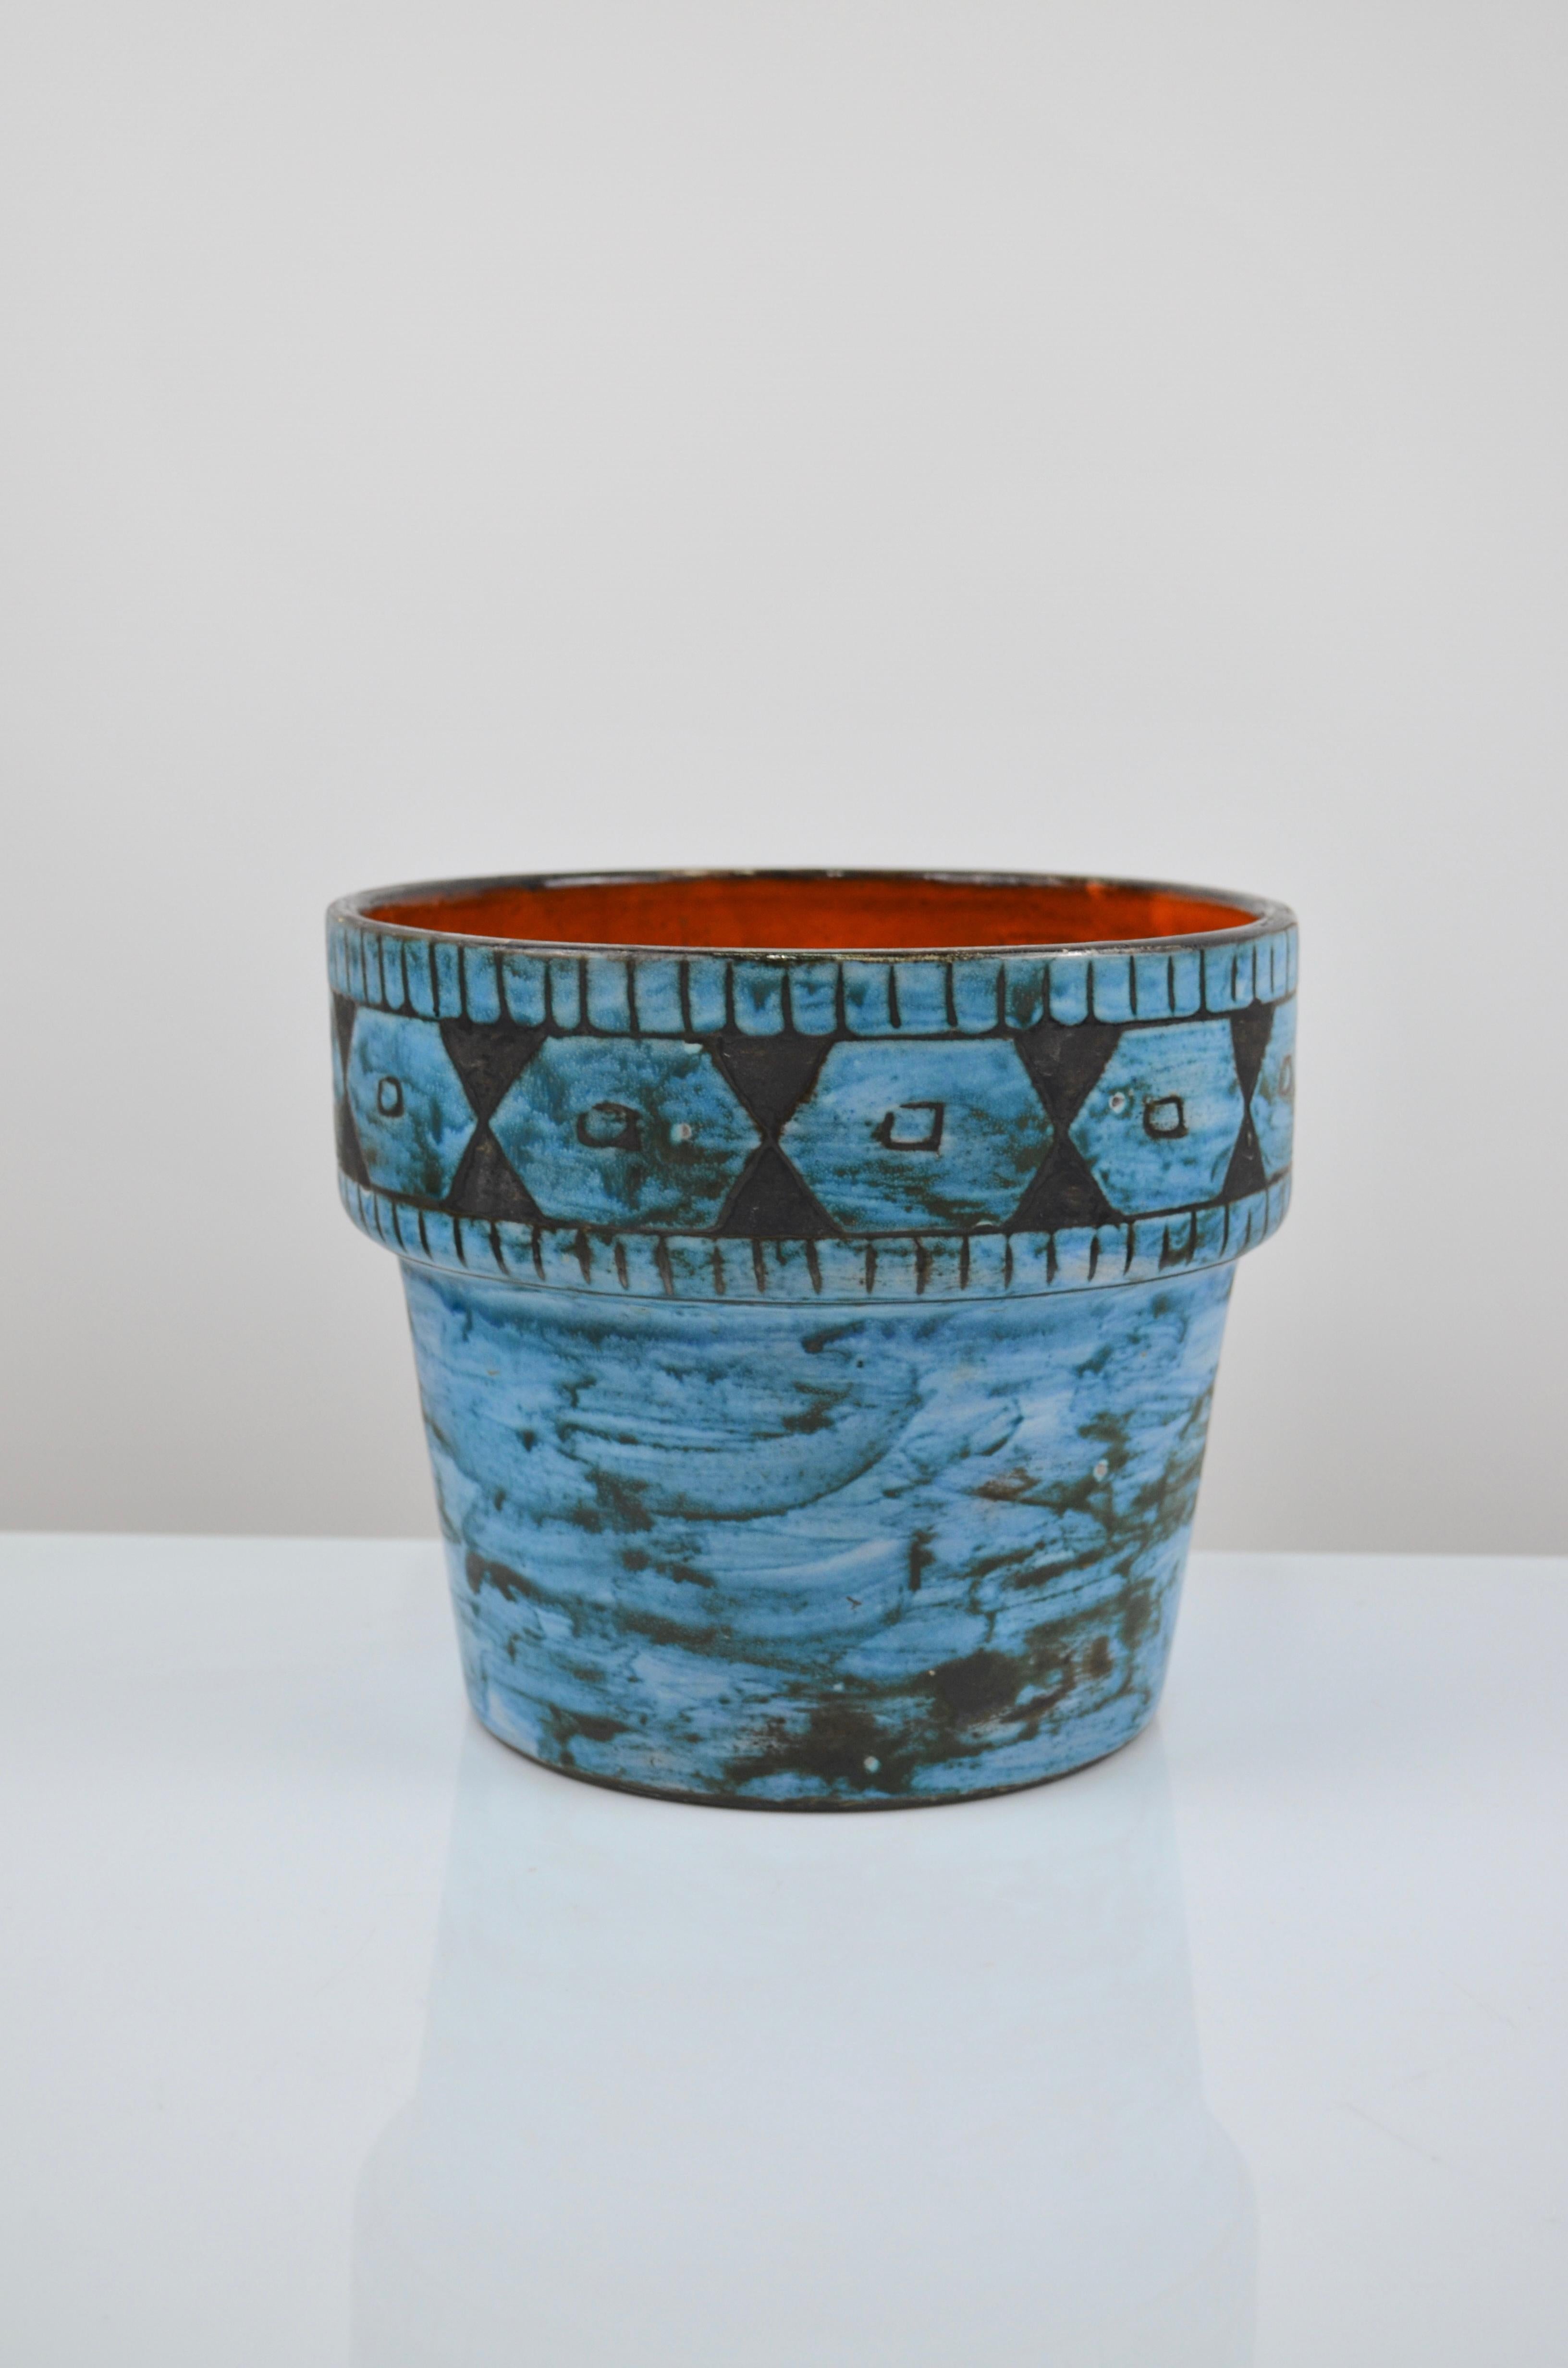 Ceramic vase by Alain Maunier, Vallauris, France, 60's
Decor of geometric friezes, black and blue enamel
Signed below